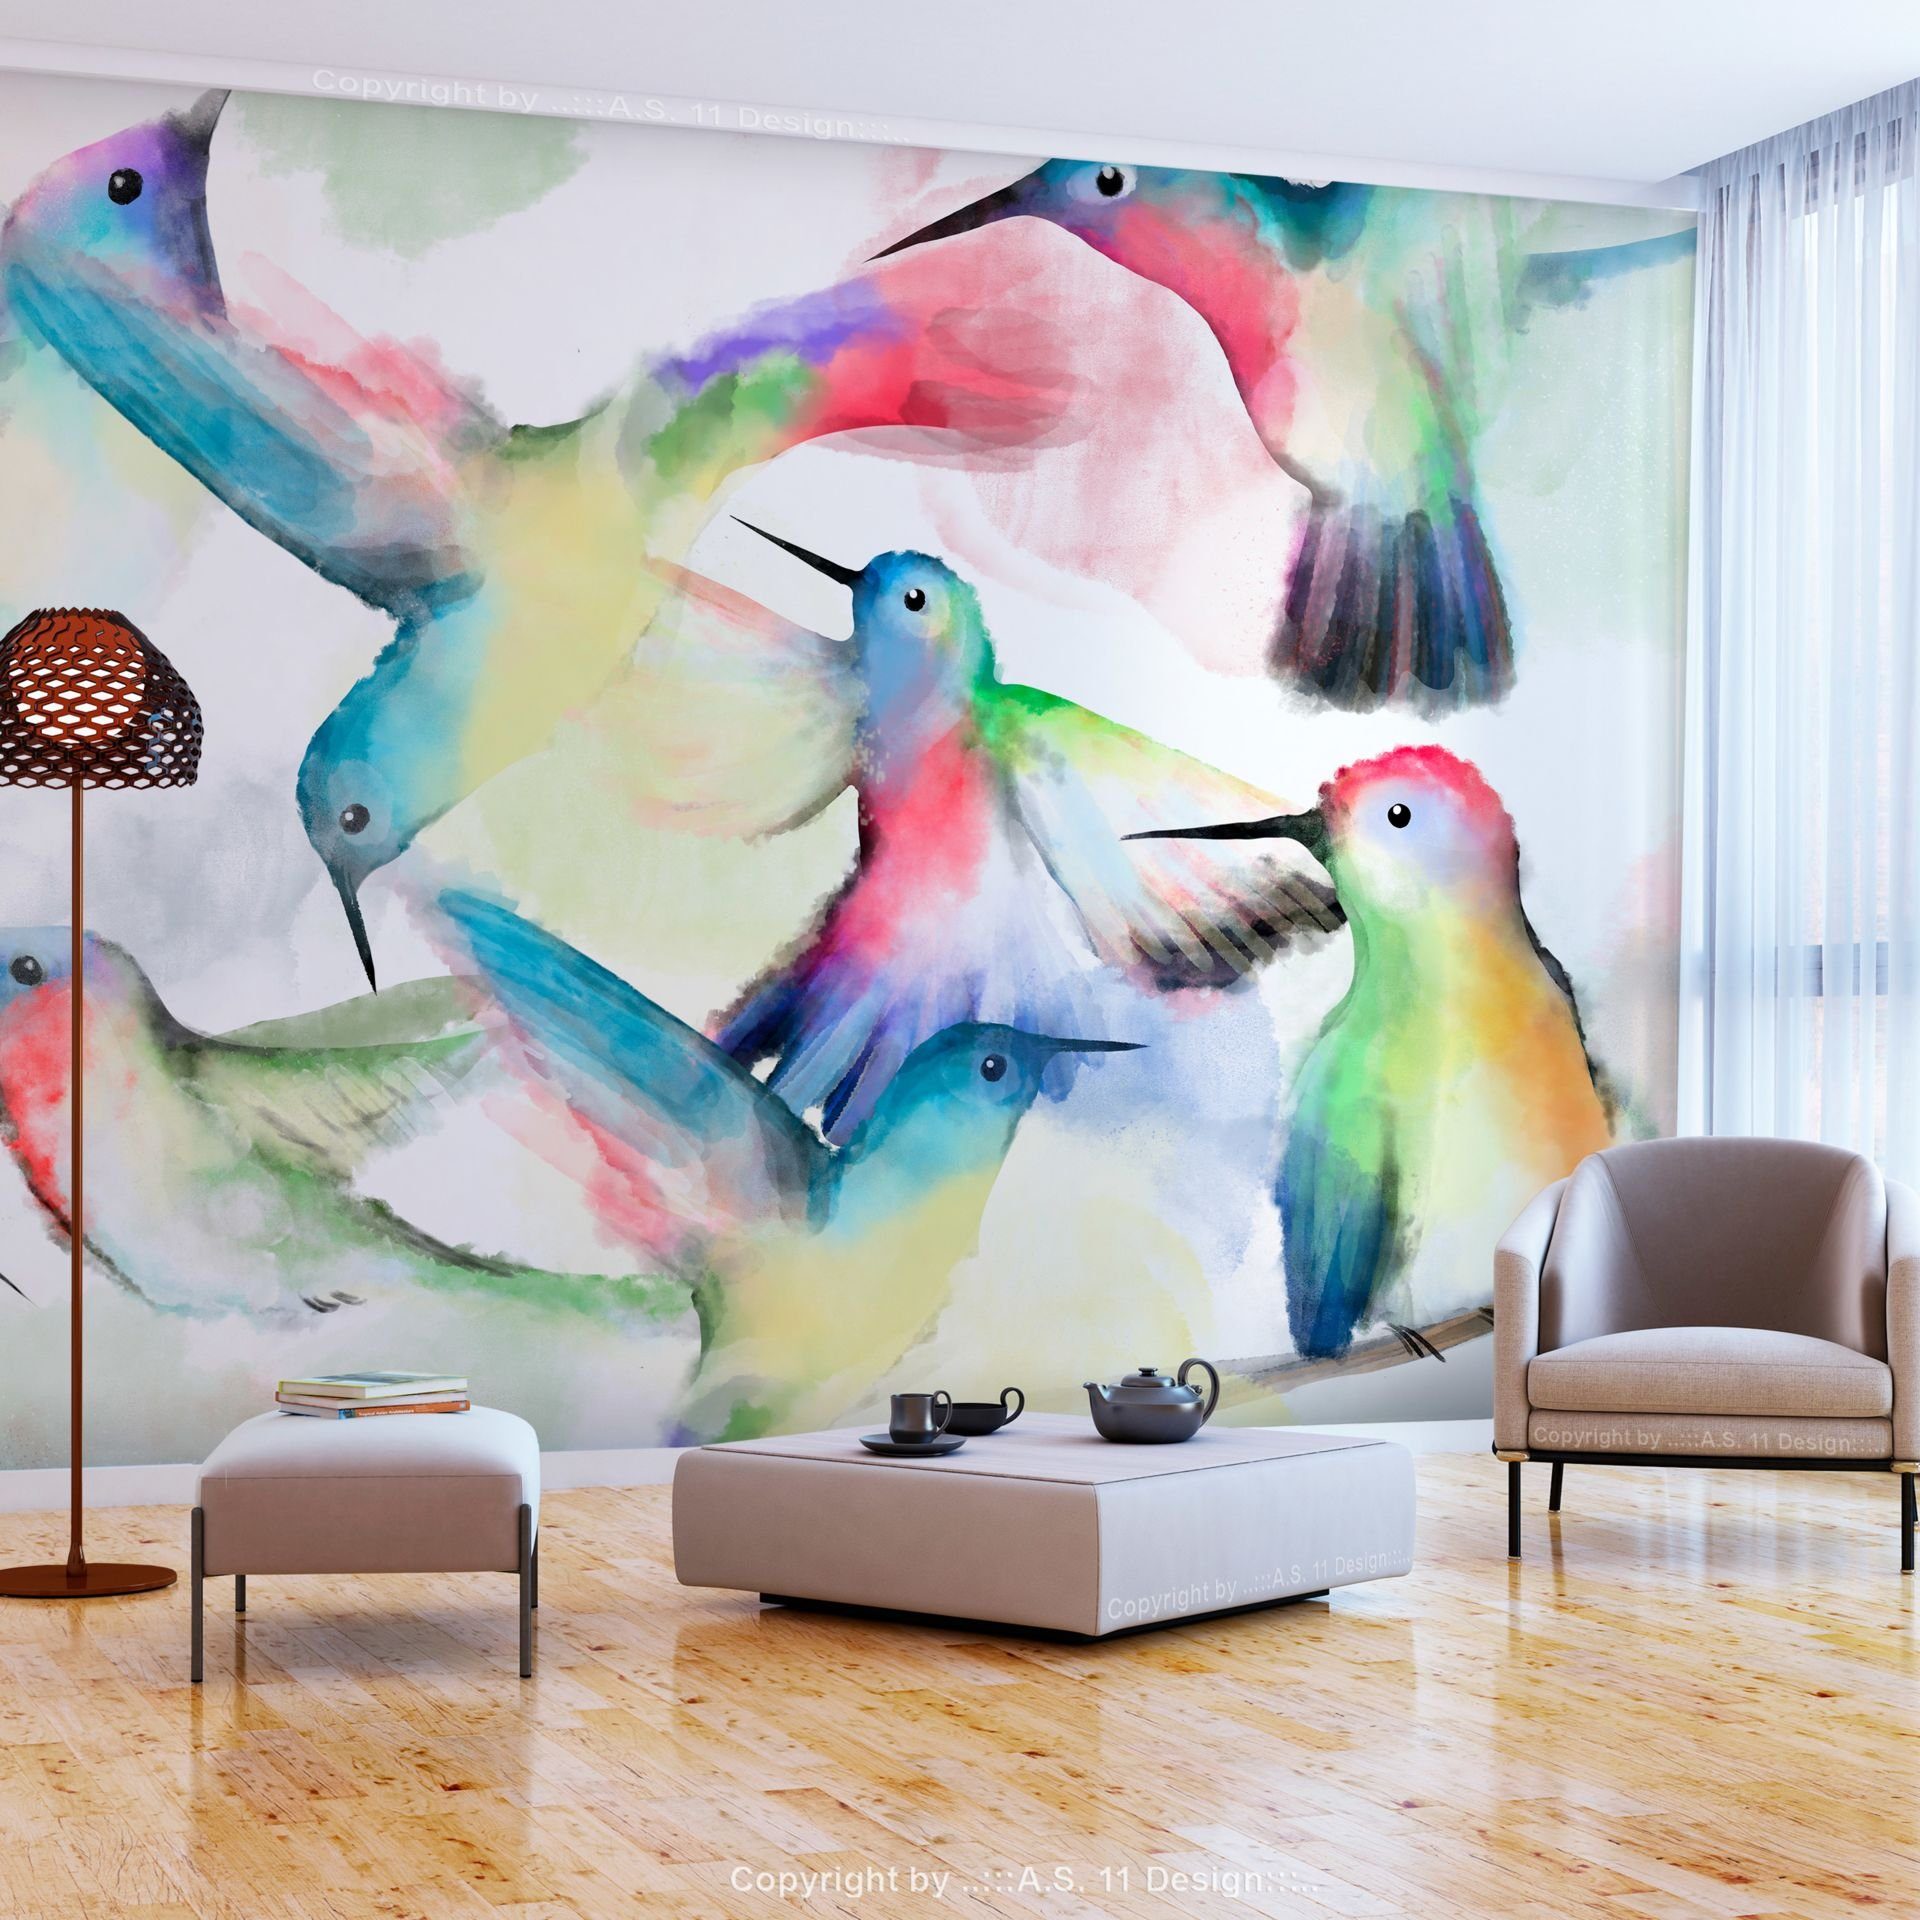 KUNSTLOFT Vliestapete Watercolor Birds 0.98x0.7 m, matt, lichtbeständige Design Tapete | Vliestapeten